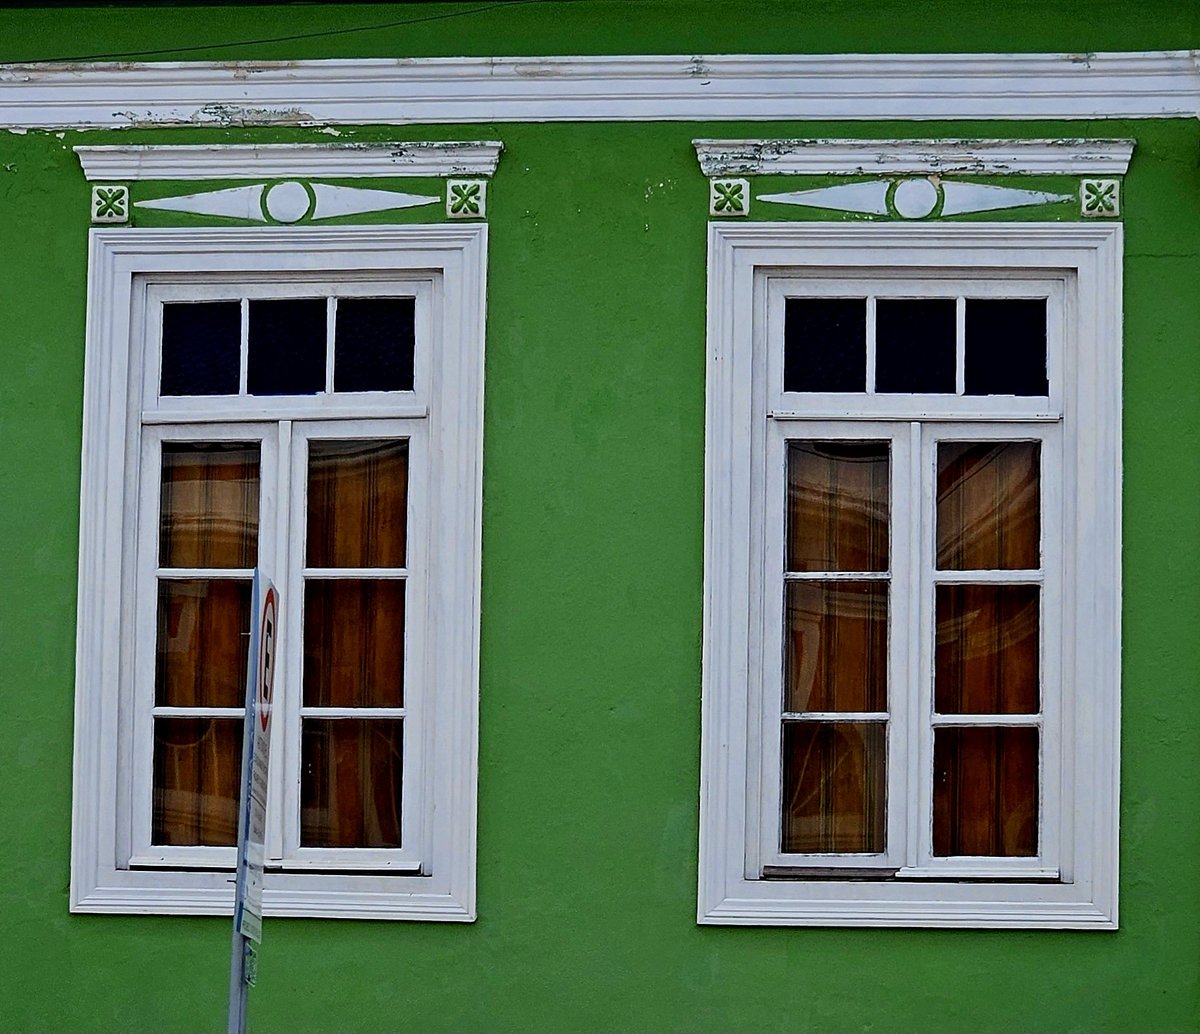 Série janelas #seriejanelas #janelas #janela #dajanela #verde #verdeebranco #lagunasc